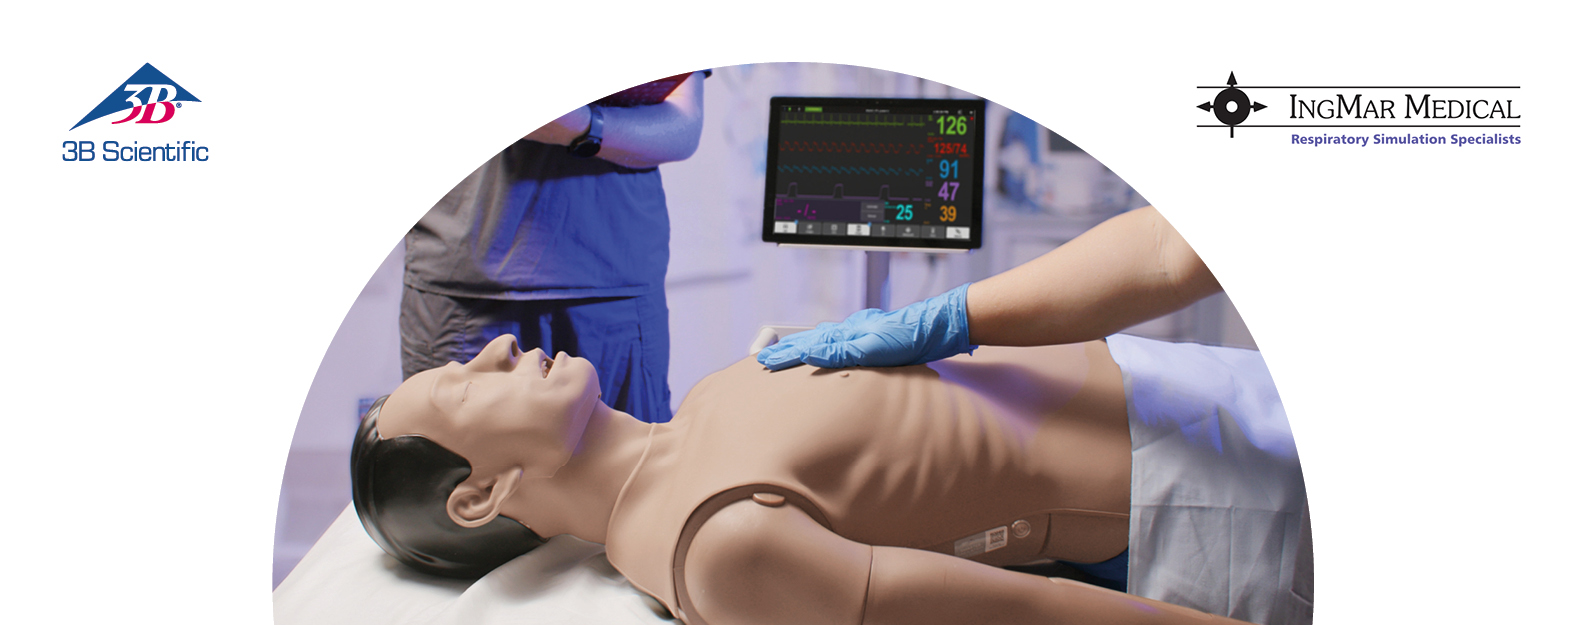 New: Aurora – the ventilation training simulator that redefines respiratory simulation and ALS training